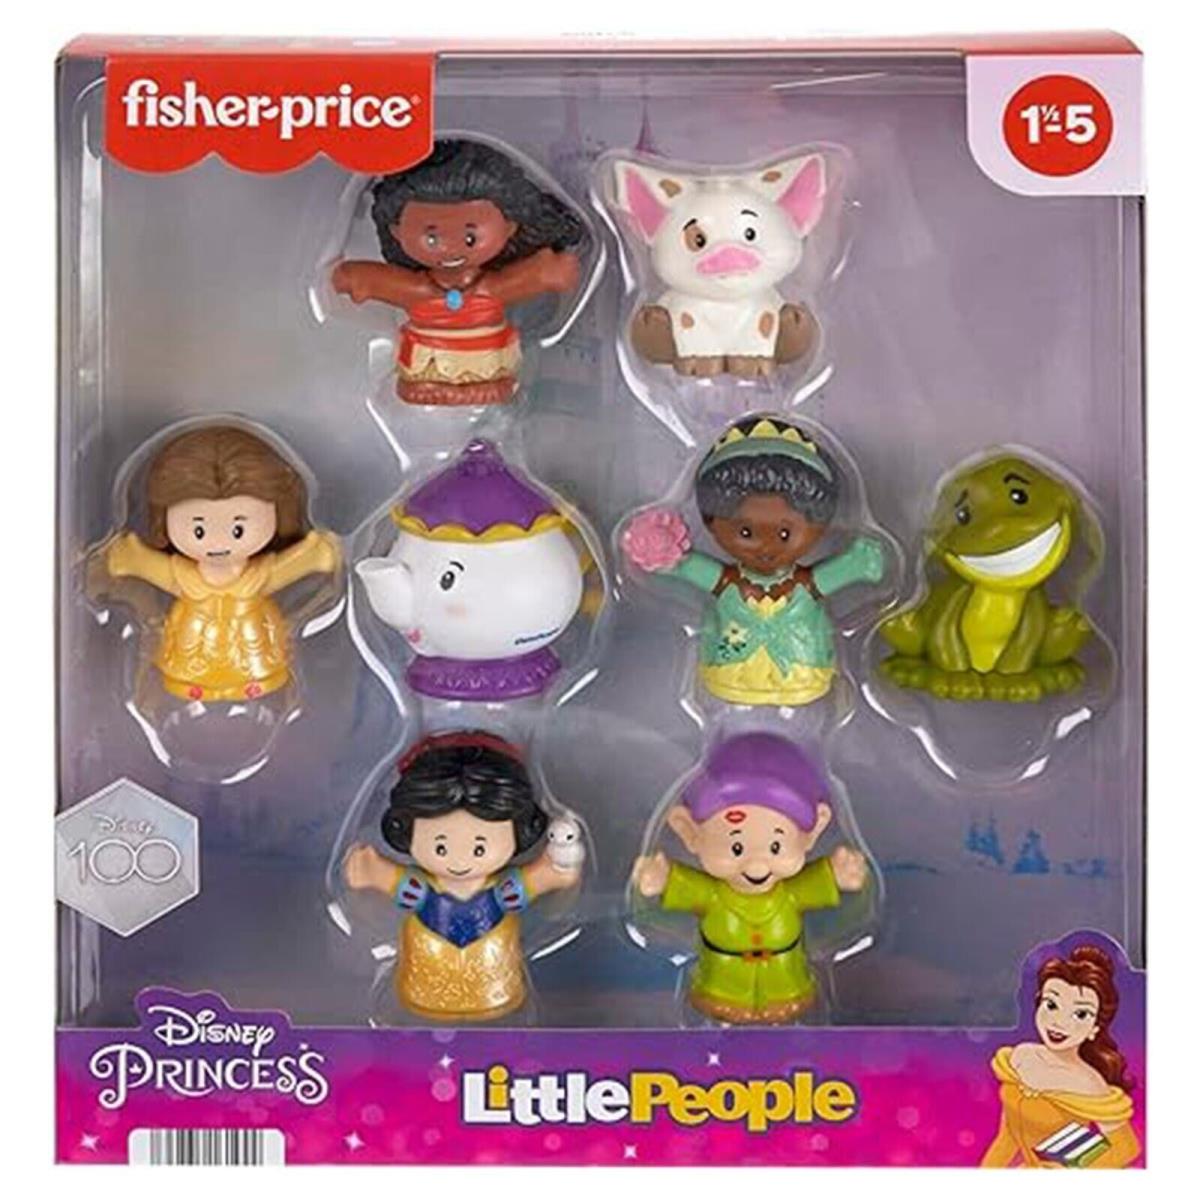 Fisher Price Little People Disney Princess with Sidekic IN Stock